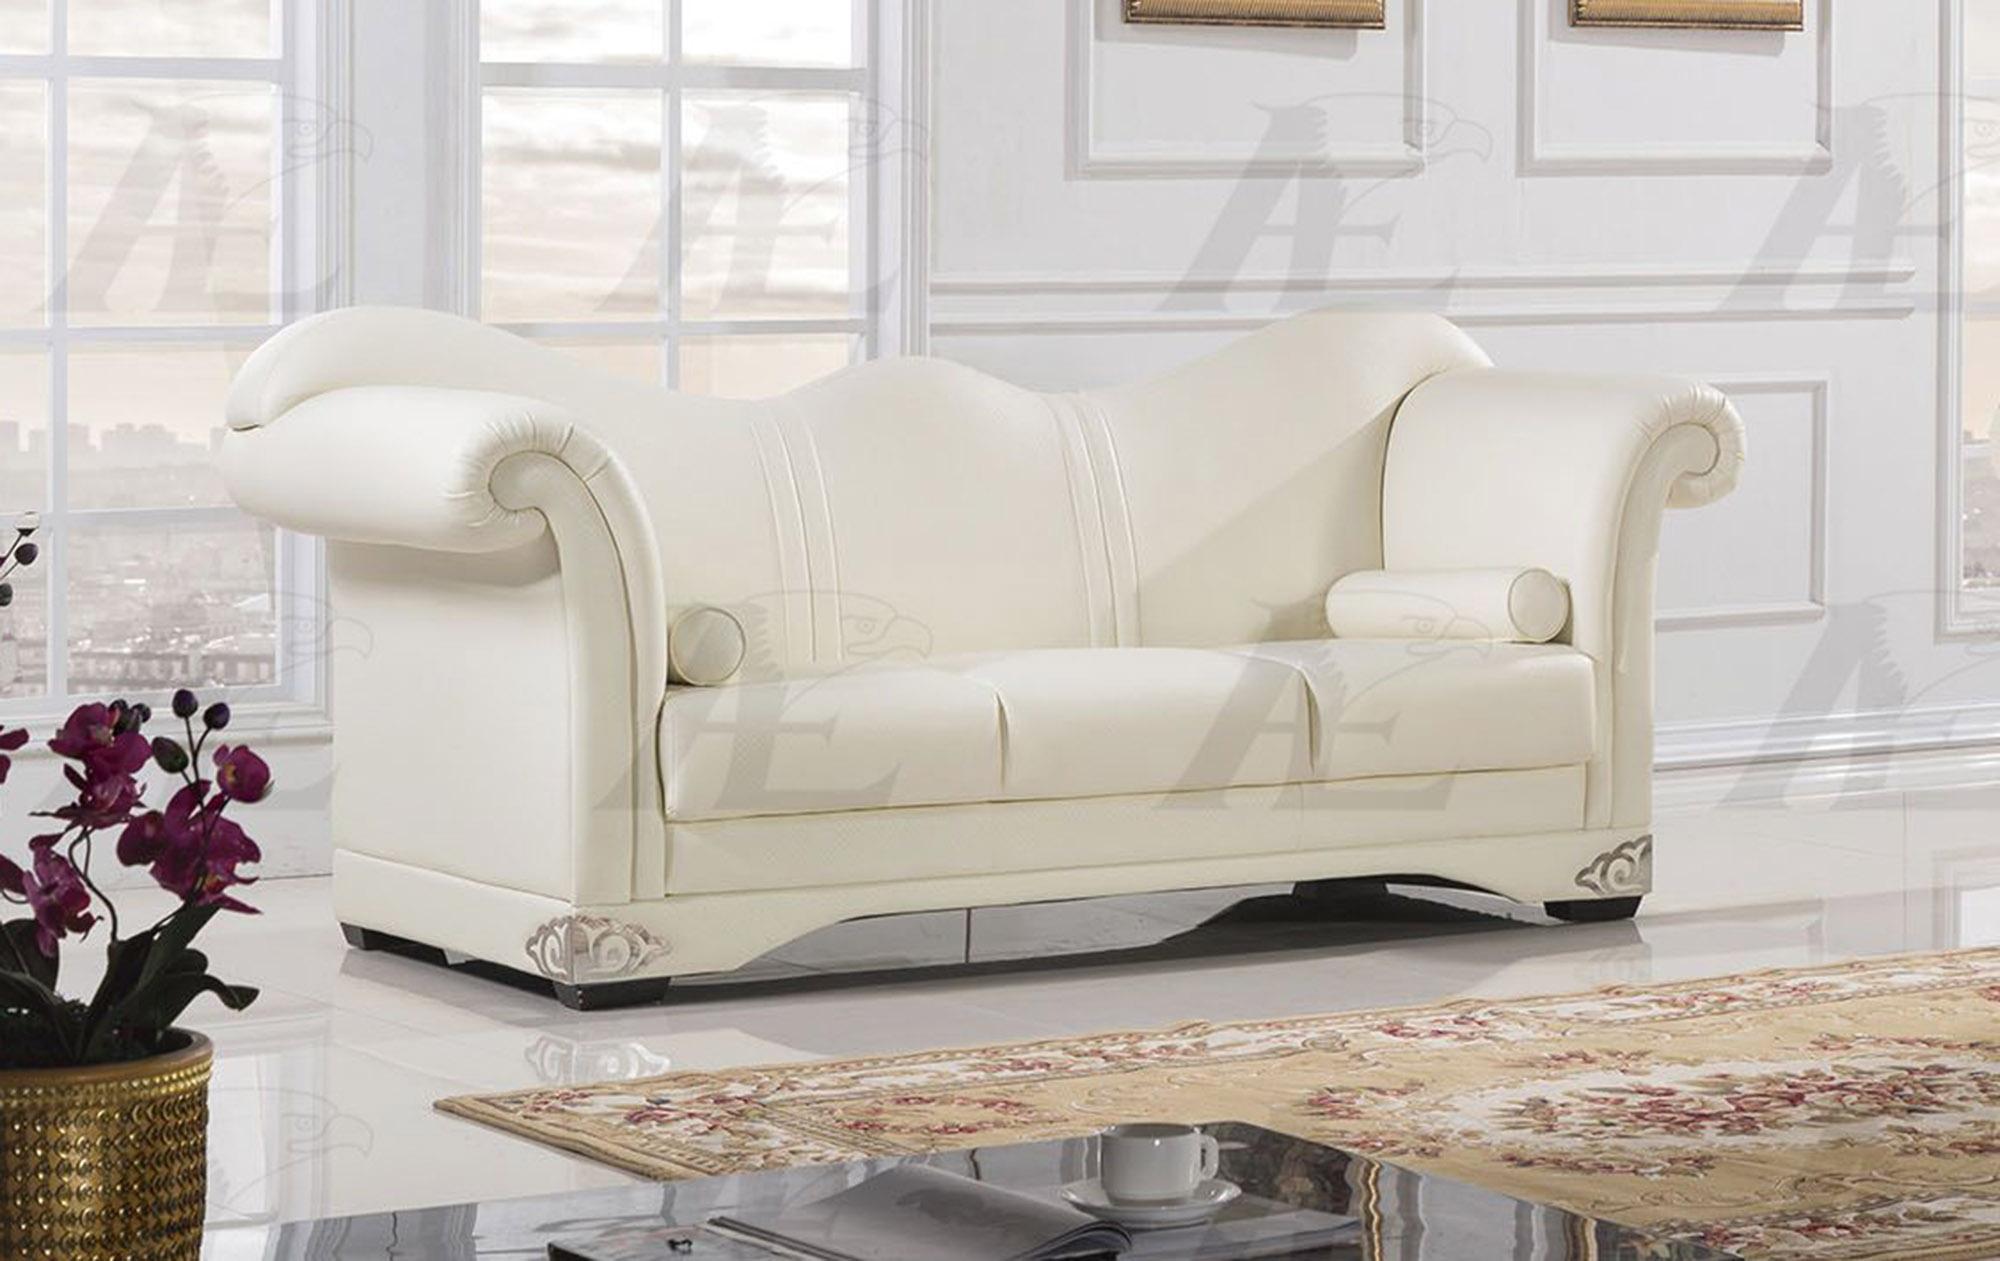 

    
American Eagle Furniture AE591-CRM Sofa Cream AE591-CRM
